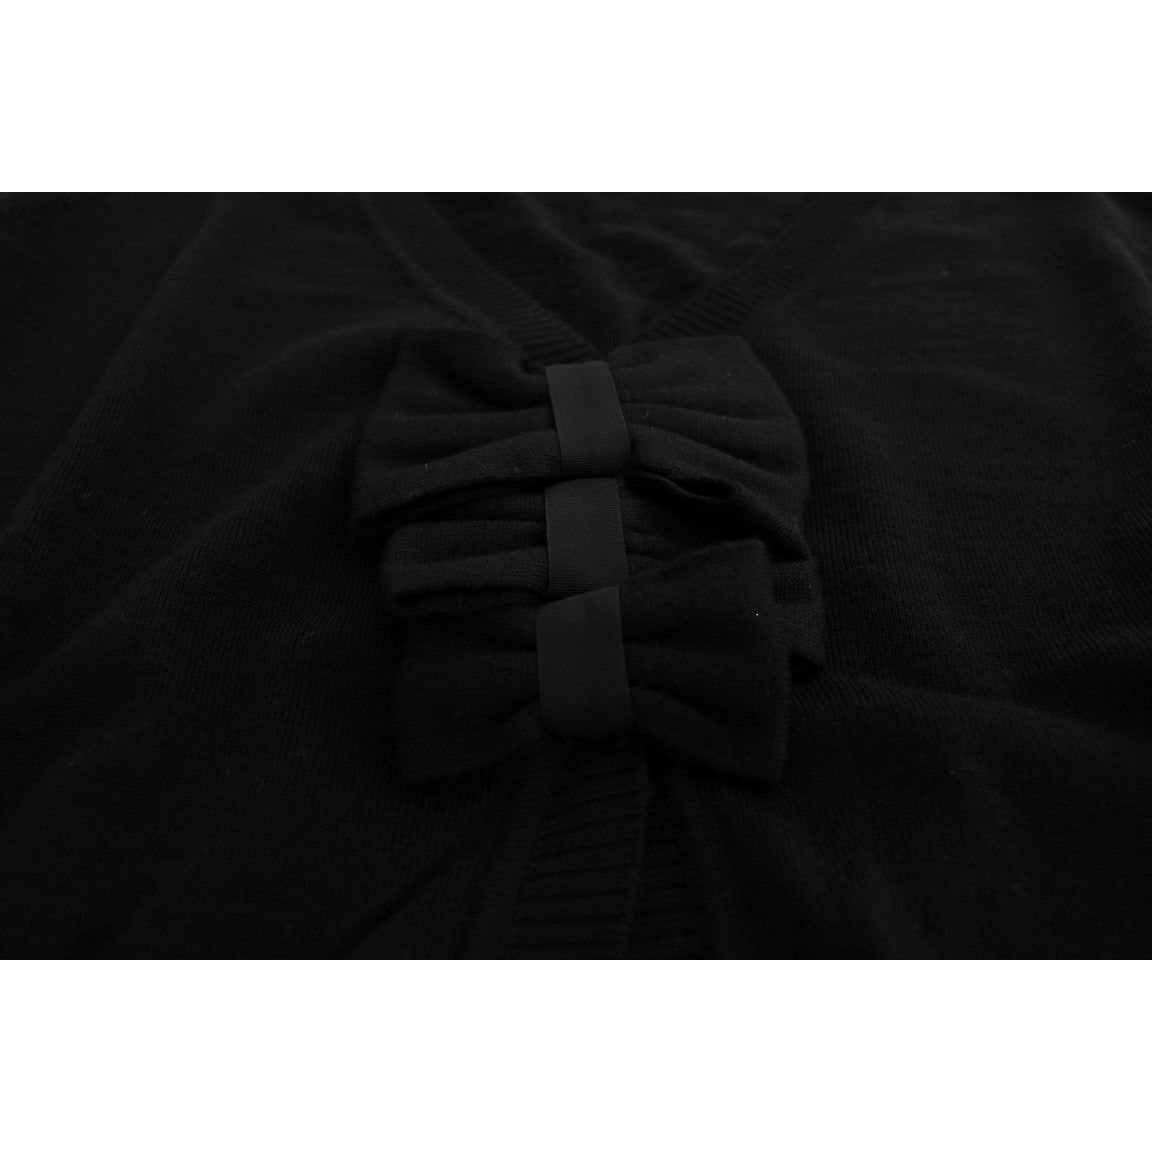 MARGHI LO'Elegant Black Wool Cardigan SweaterMcRichard Designer Brands£129.00